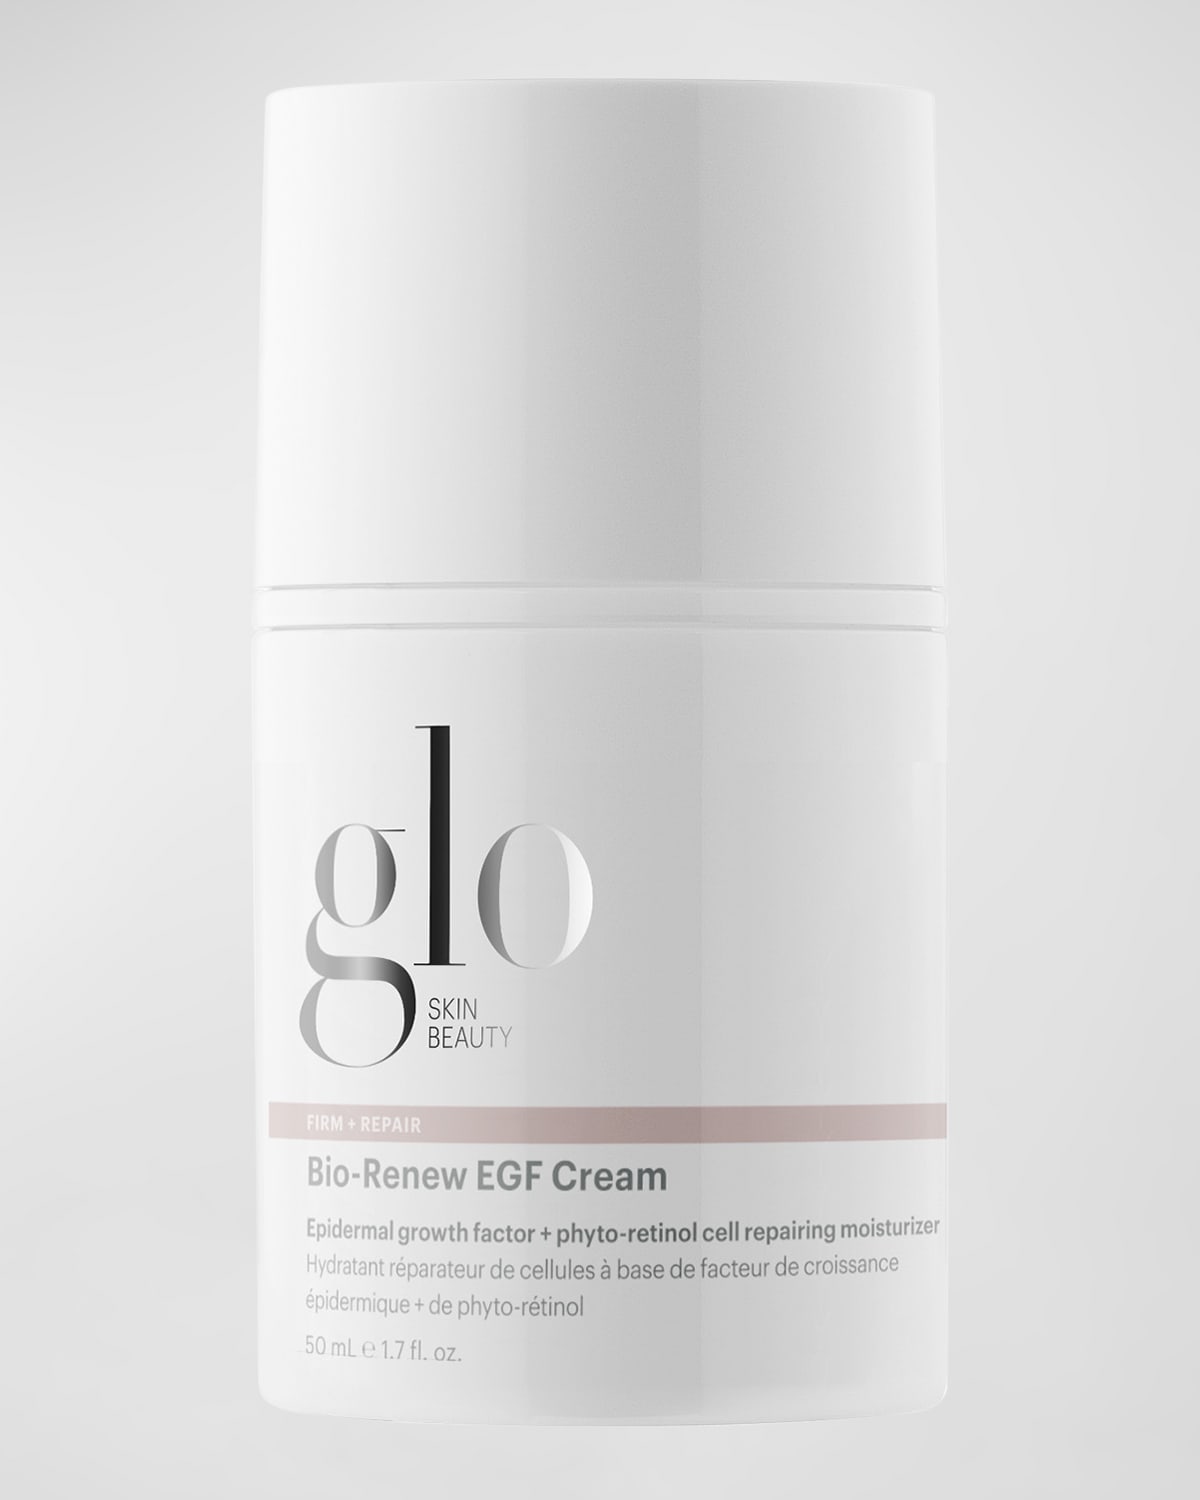 Glo Skin Beauty Bio-Renew EGF Cream, 1.7 oz.